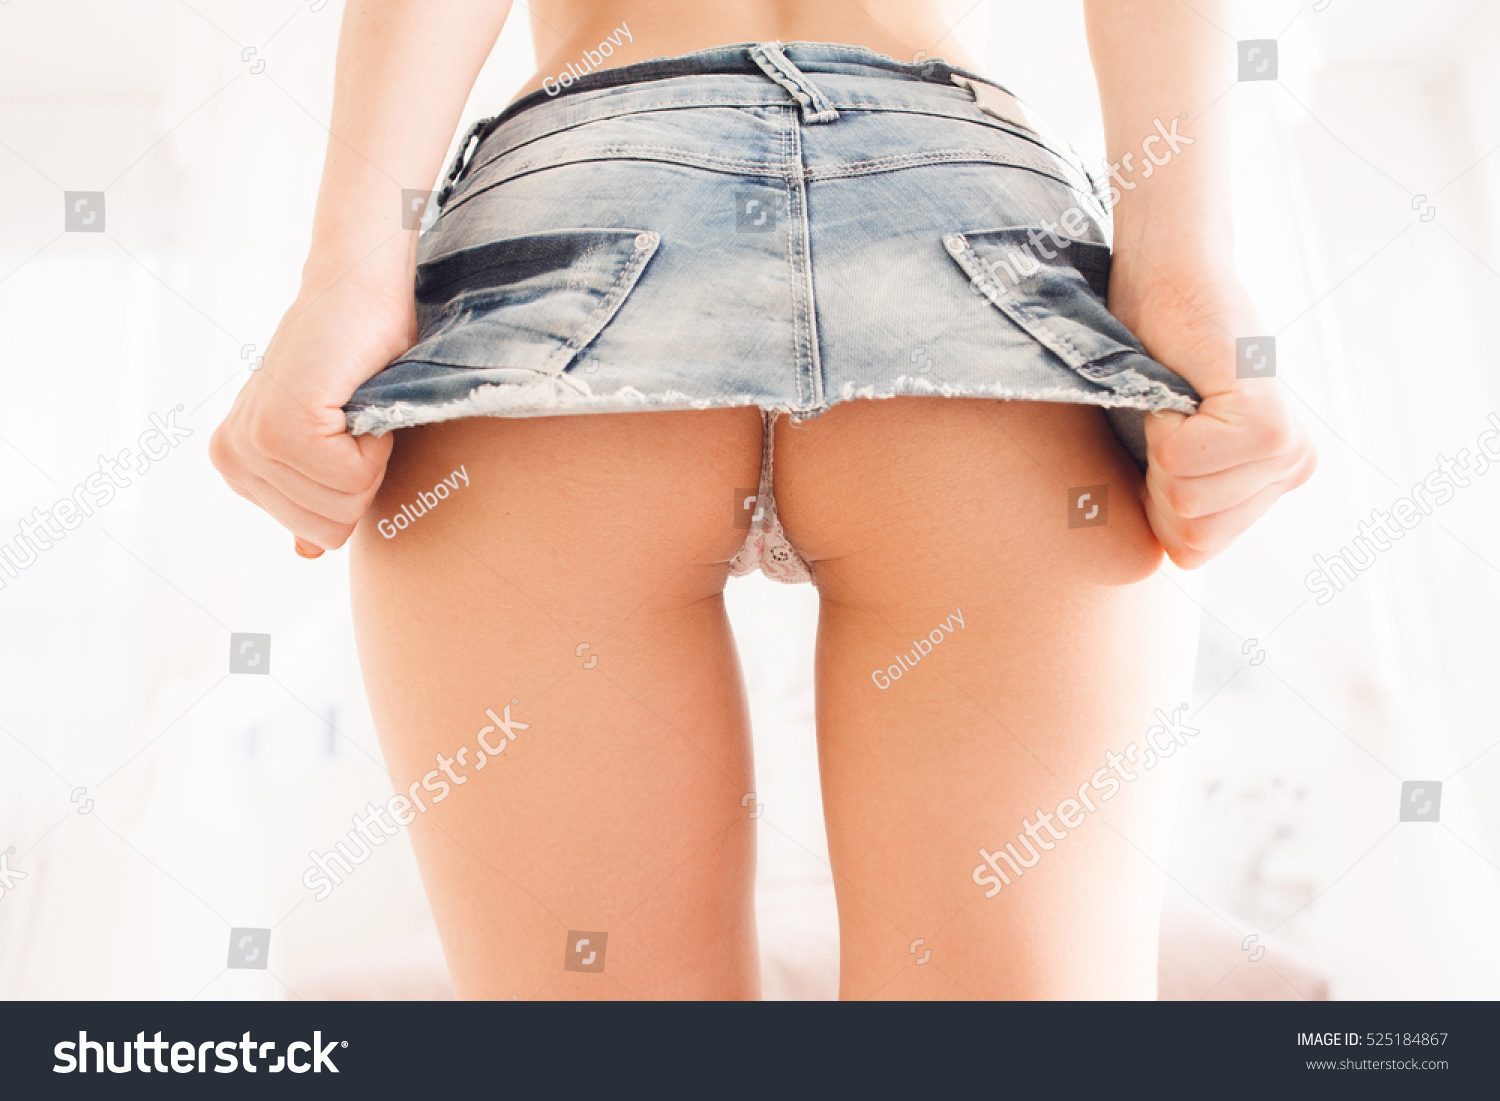 danny koay recommends Short Skirt Showing Ass